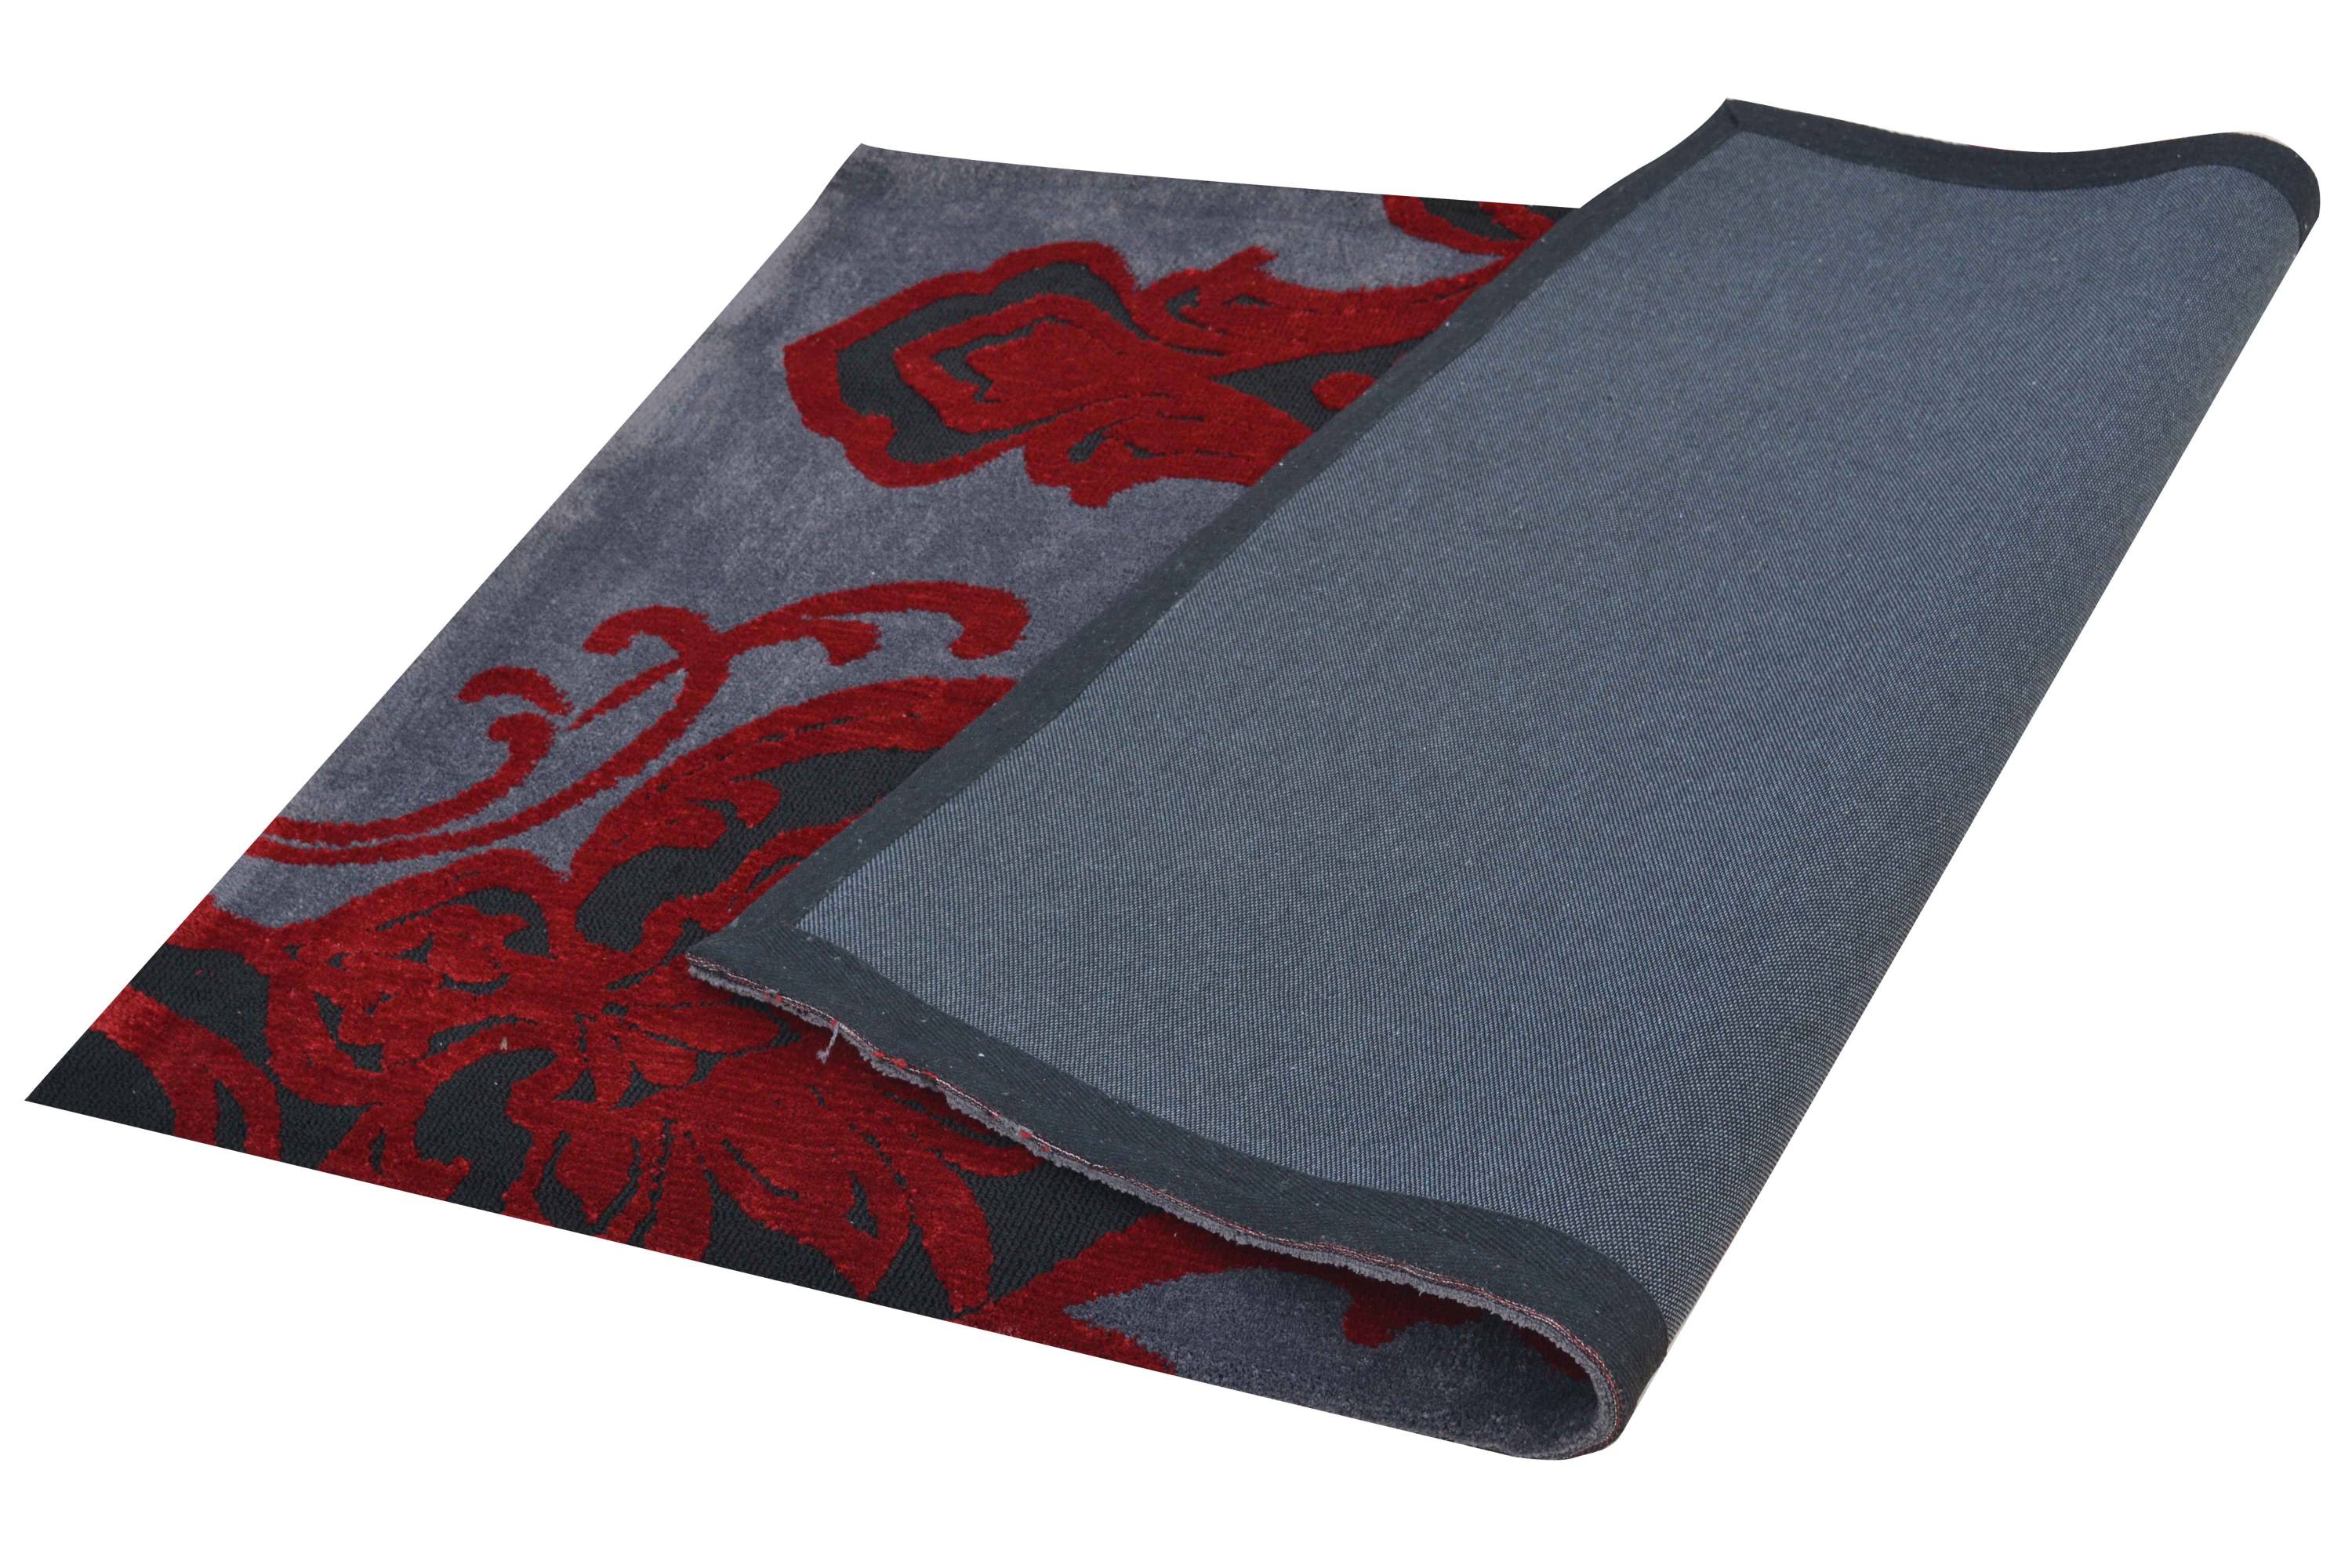 Detec™ Presto Modern Abstract Polyester Carpet